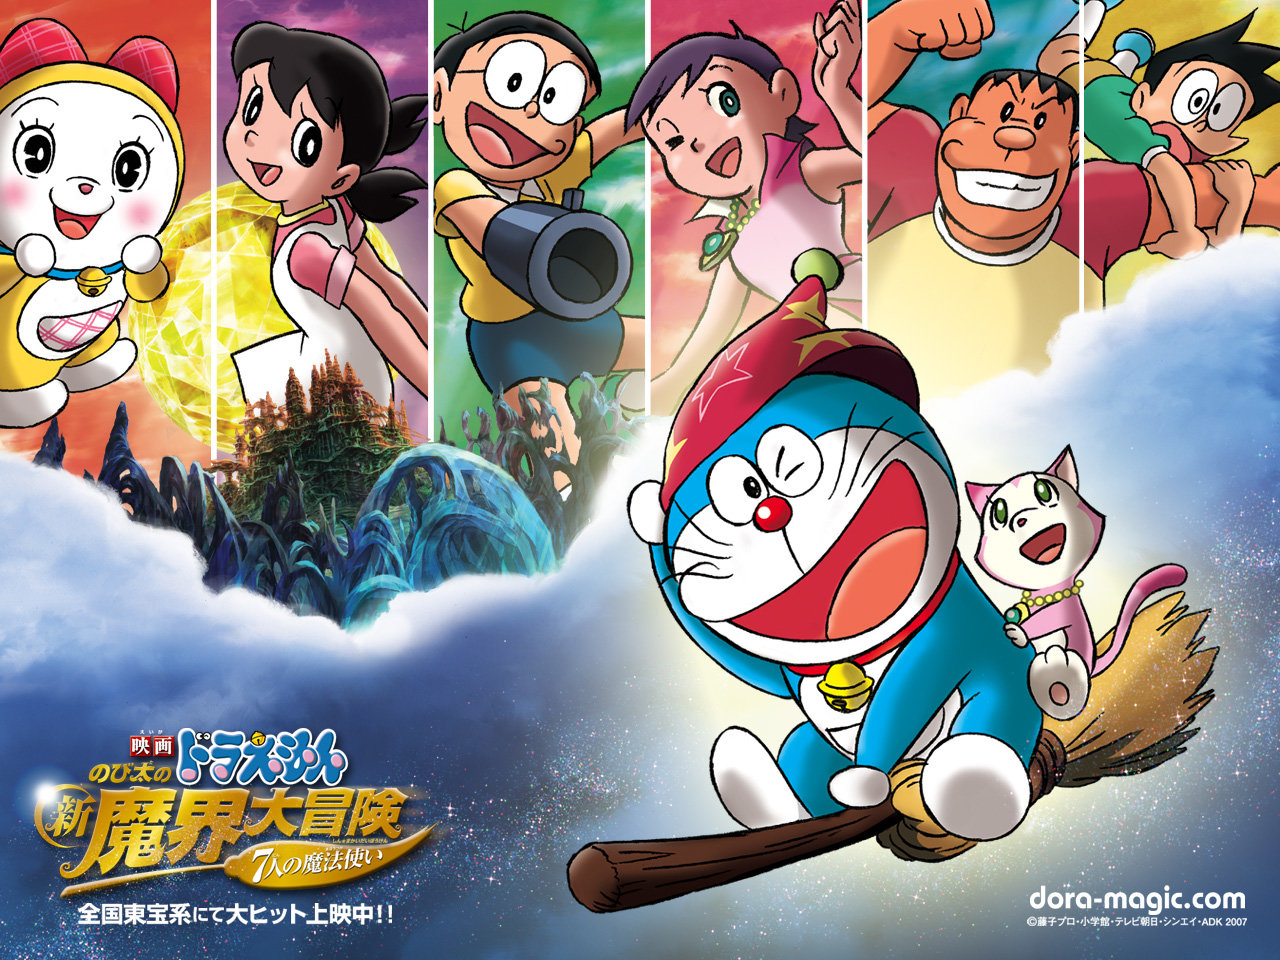 Download Hd 1280x960 Doraemon PC Wallpaper ID271468 For Free